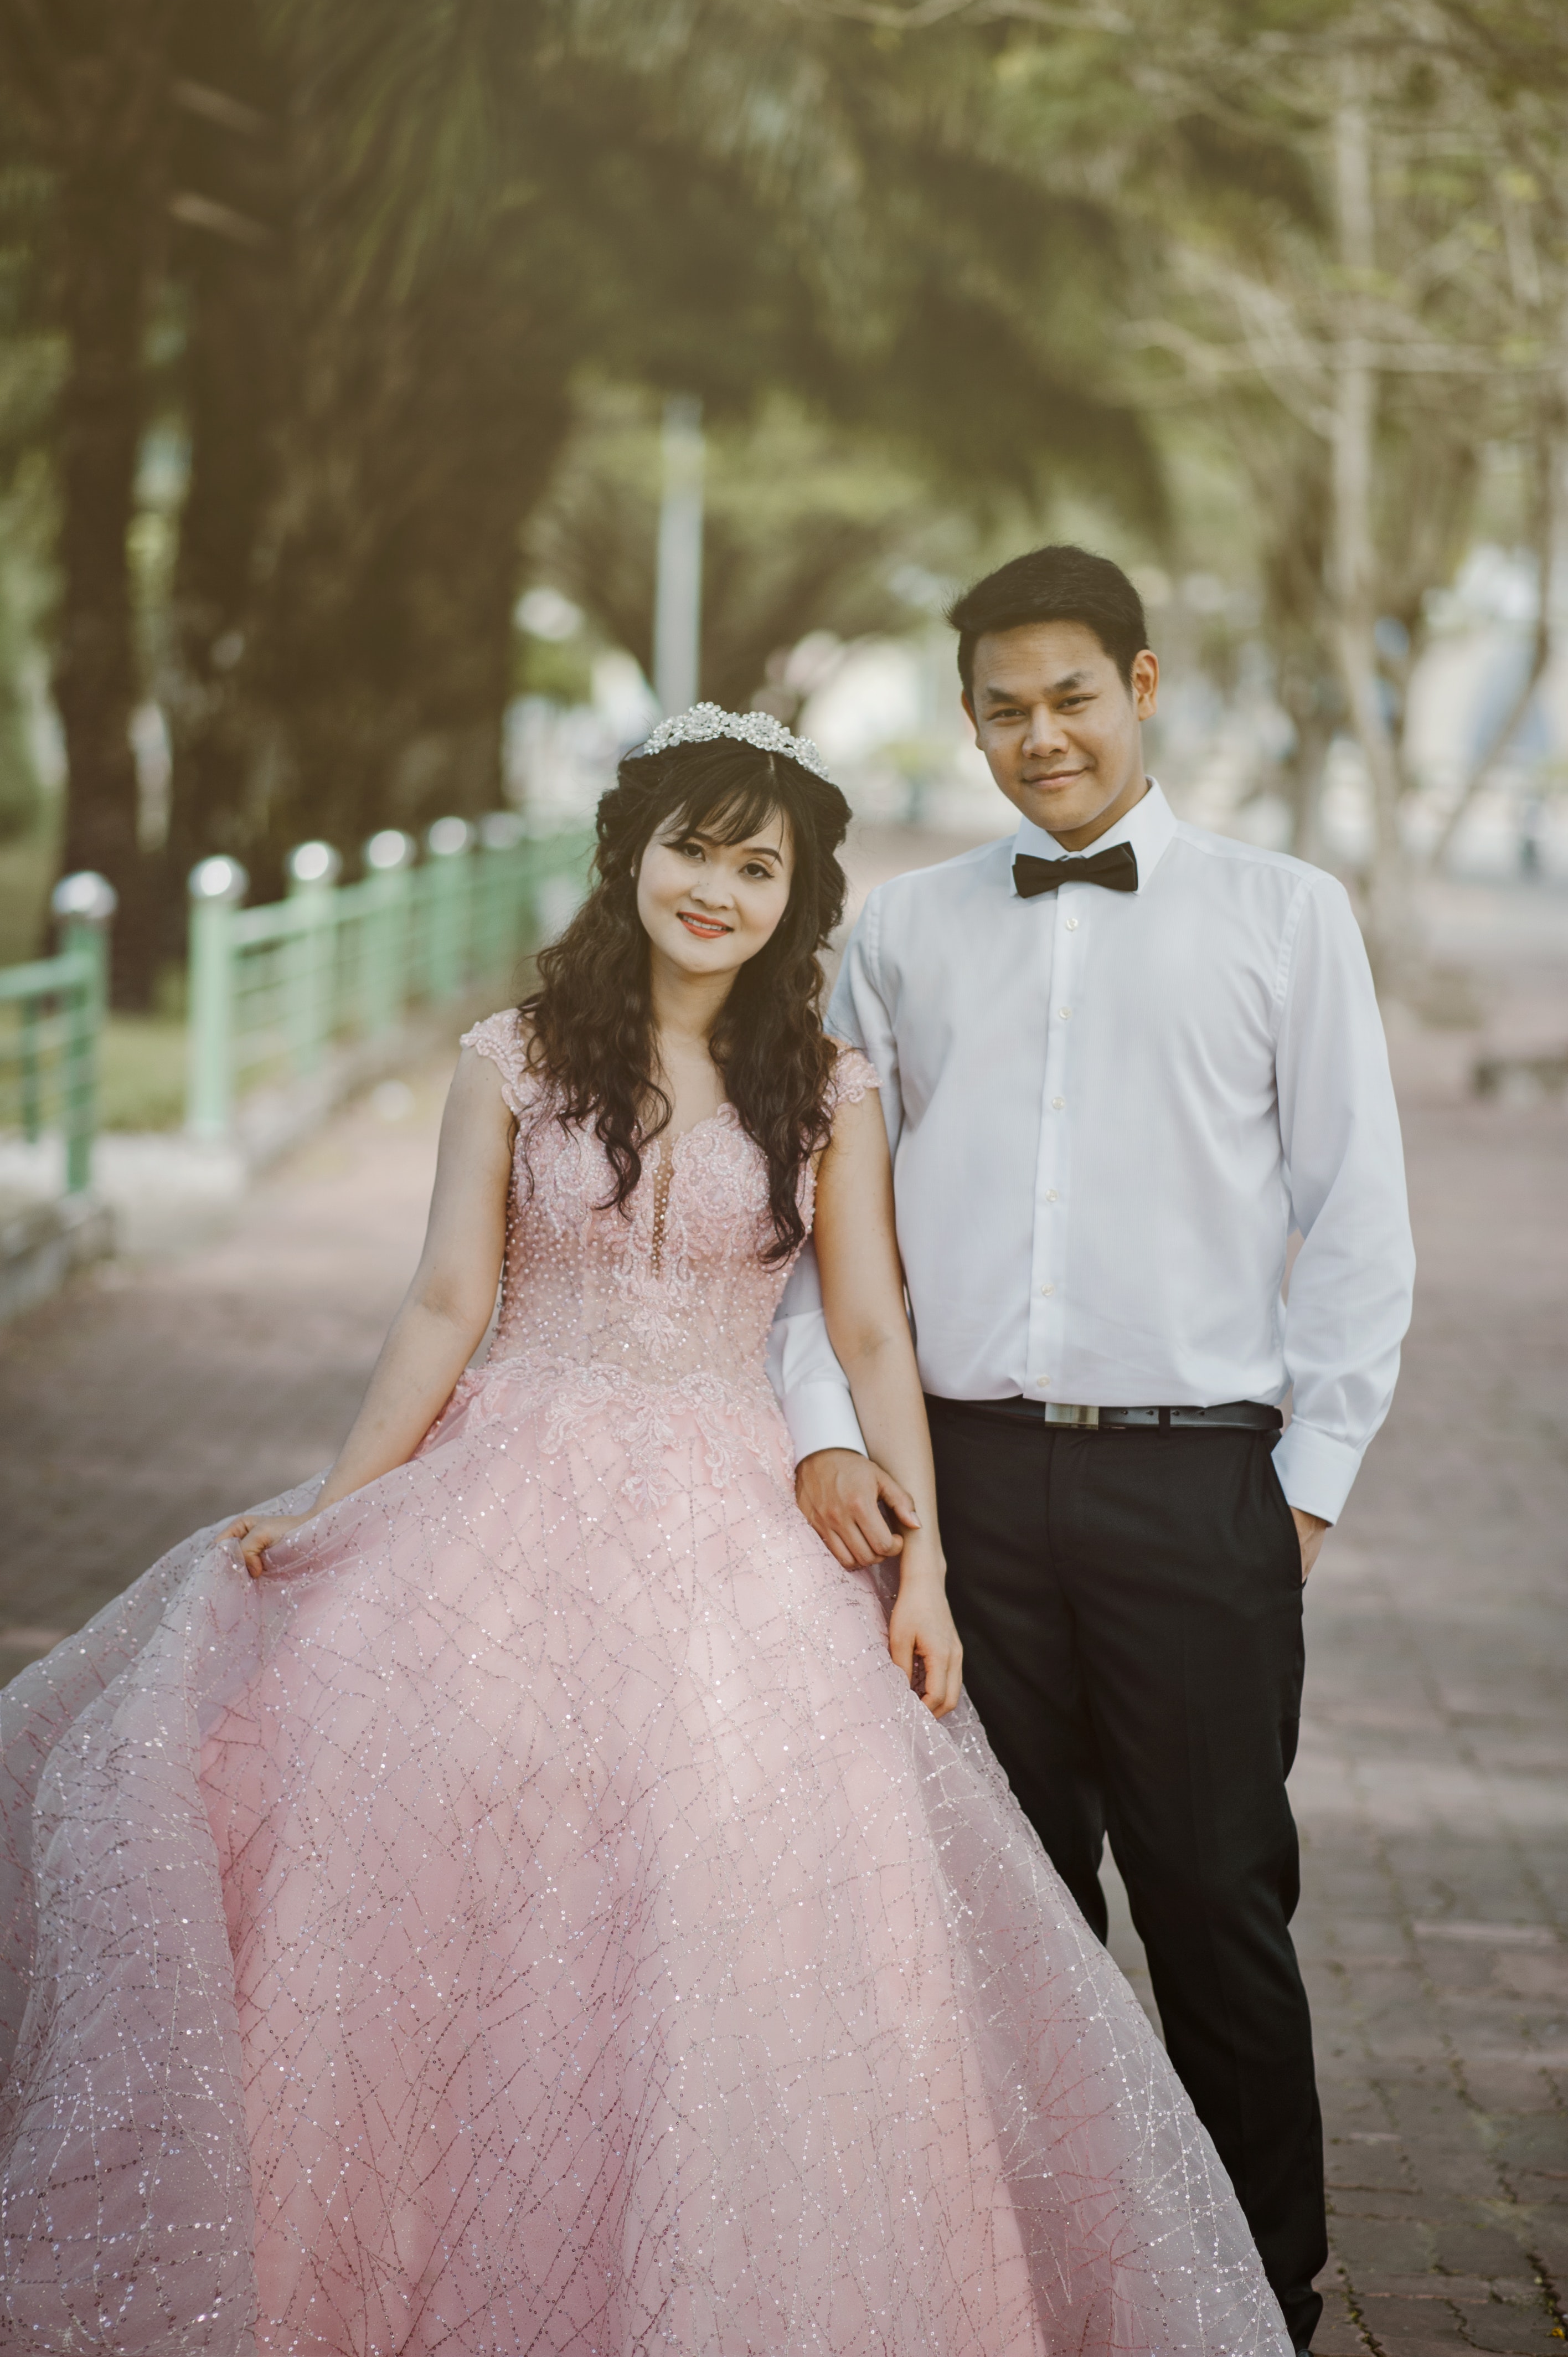 Woman Wearing Pink Wedding Gown Standing Next to Man Wearing White Dress Shirt, Adult, People, Wedding gown, Wedding dress, HQ Photo